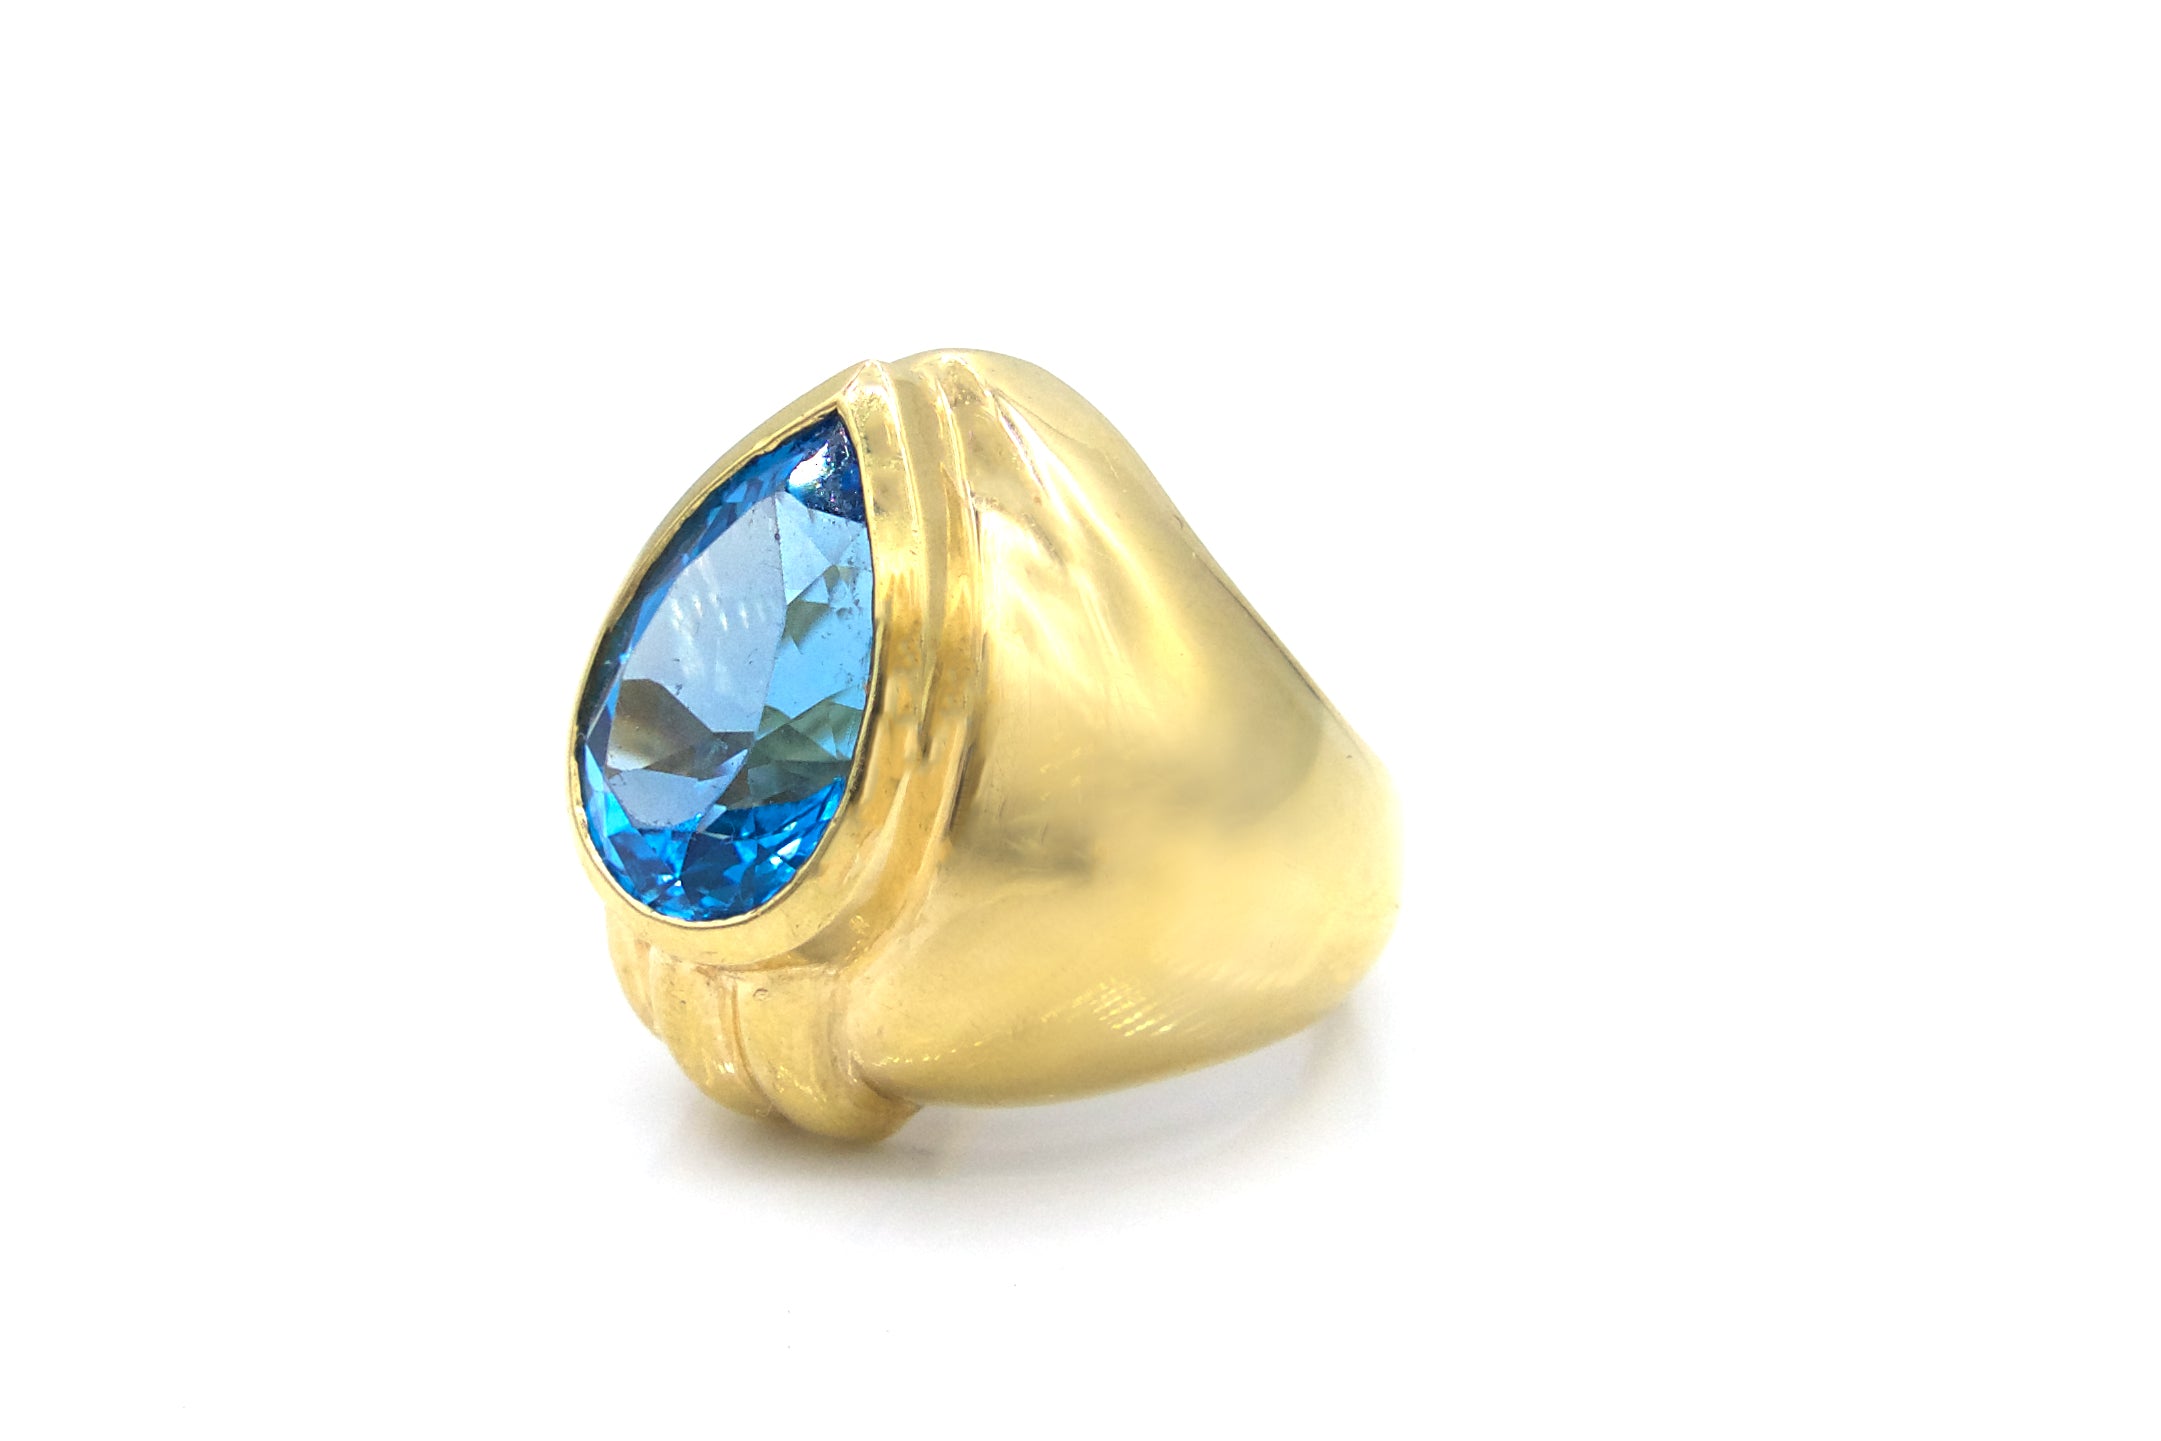 Pear Shaped Bright Blue Bezel Set Topaz Cocktail Ring in 14K Gold